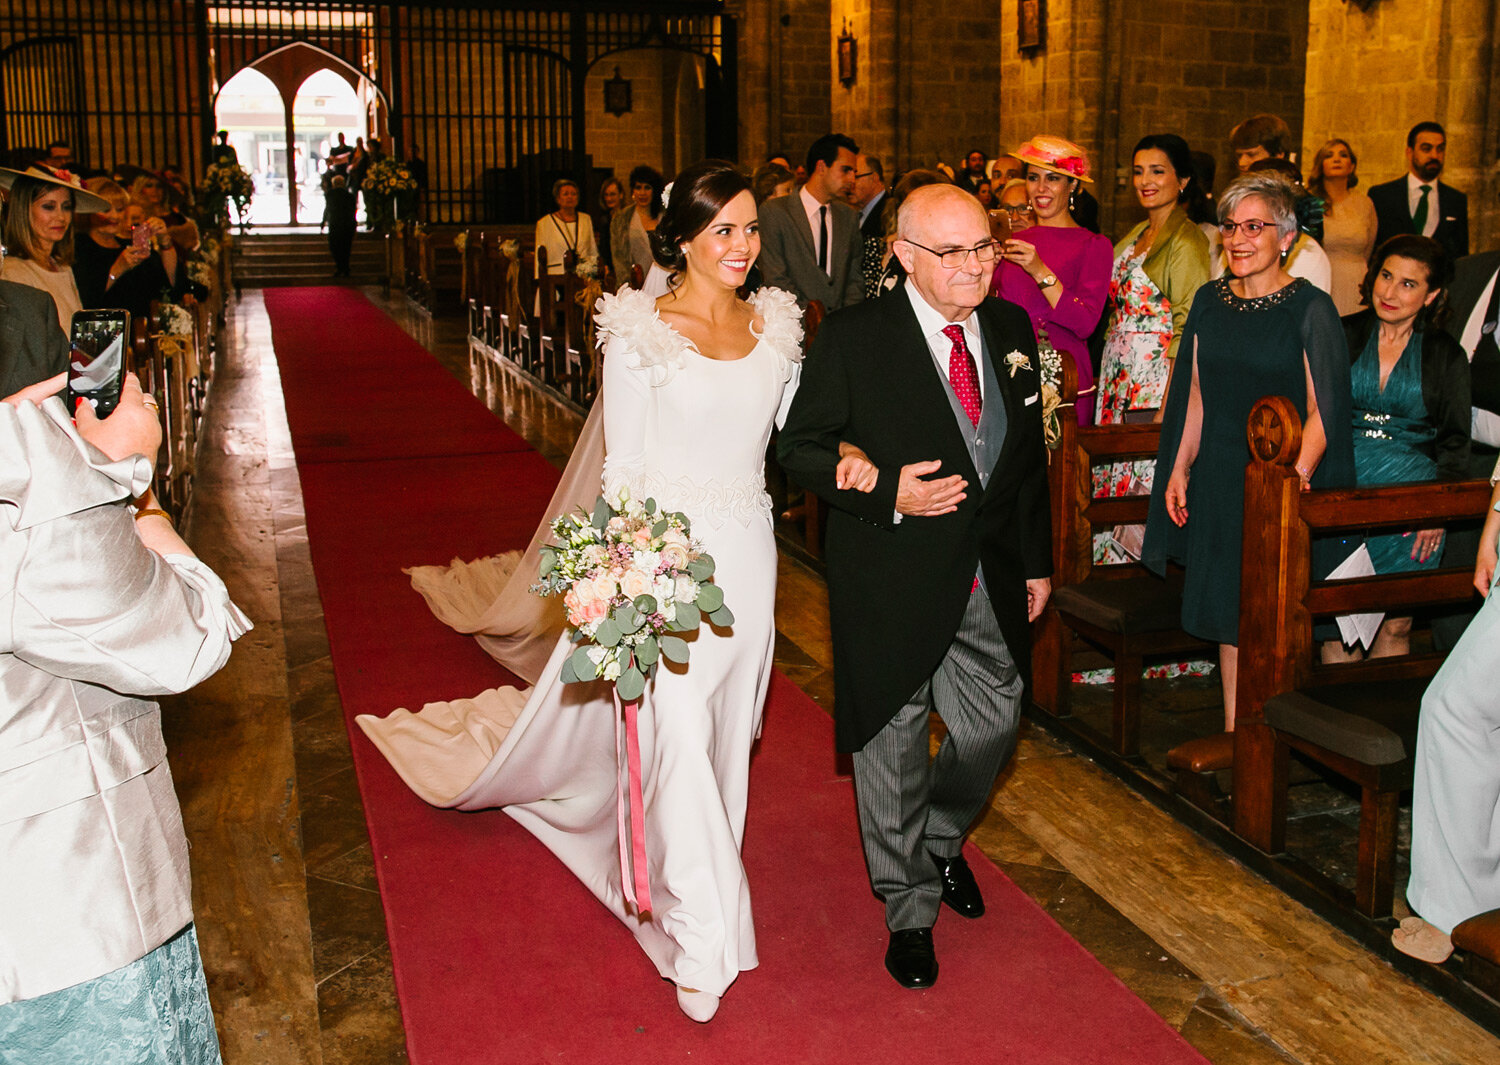 107-vilayvidal-fotografia-bodas-gandia-valencia-alicante-boda-elia-fernando_mas_dalzedo.jpg